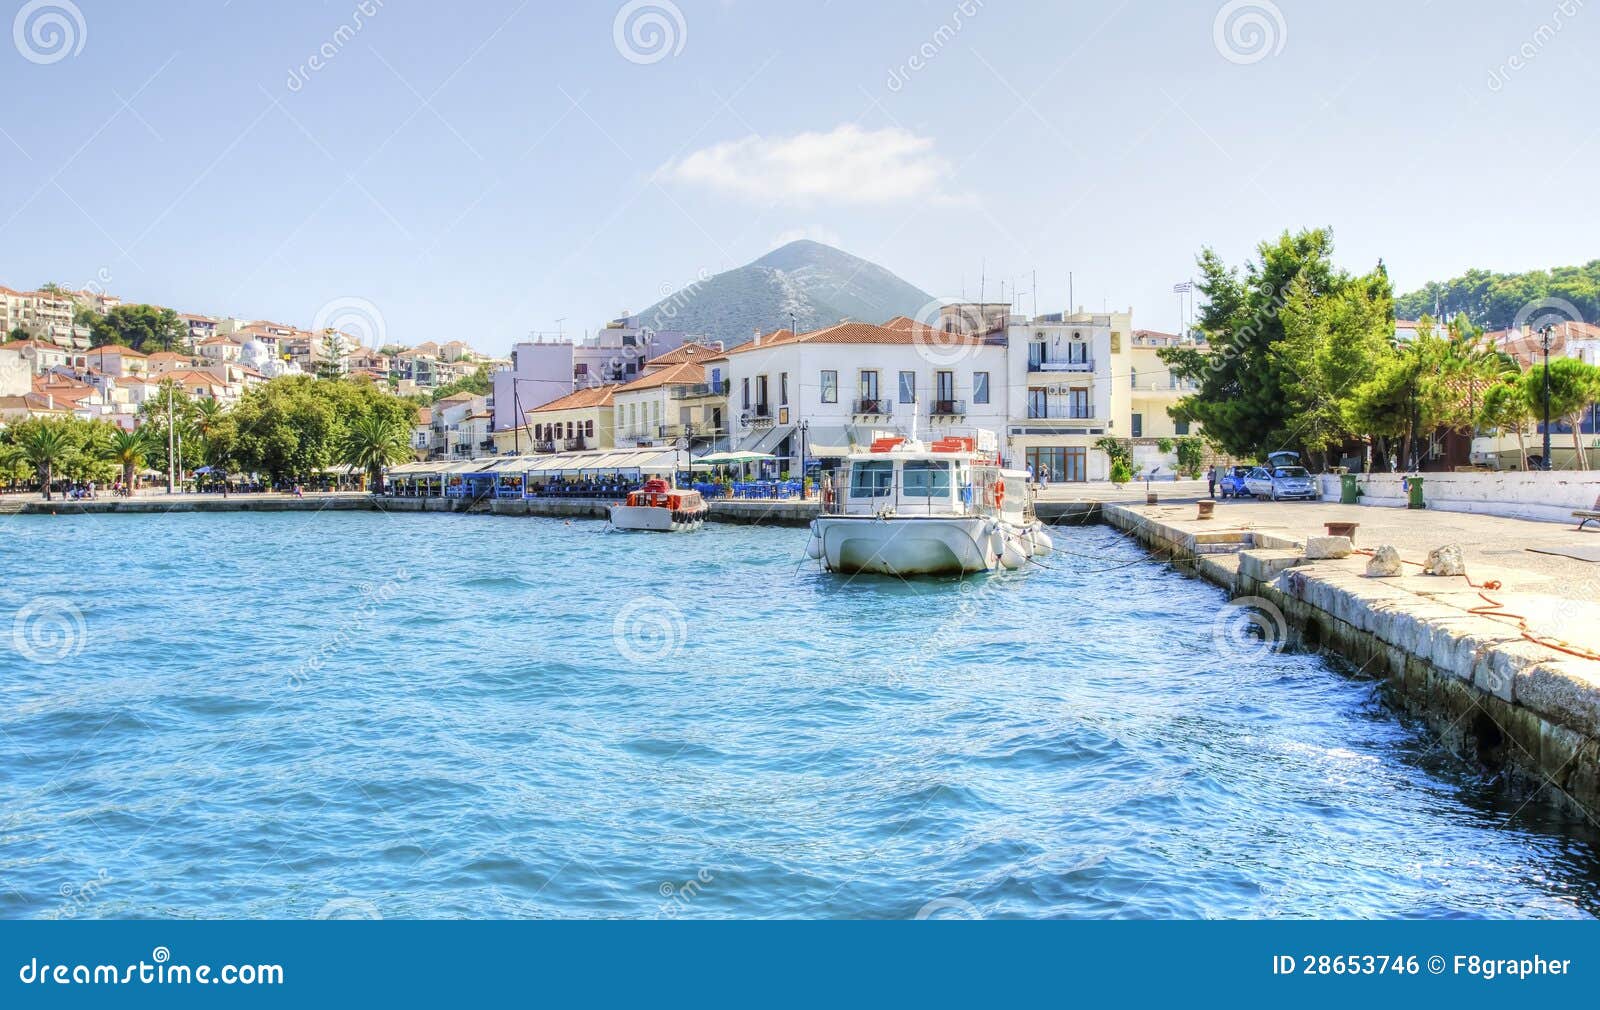 Beautiful Pylos, Greece stock photo. Image of coastline - 28653746